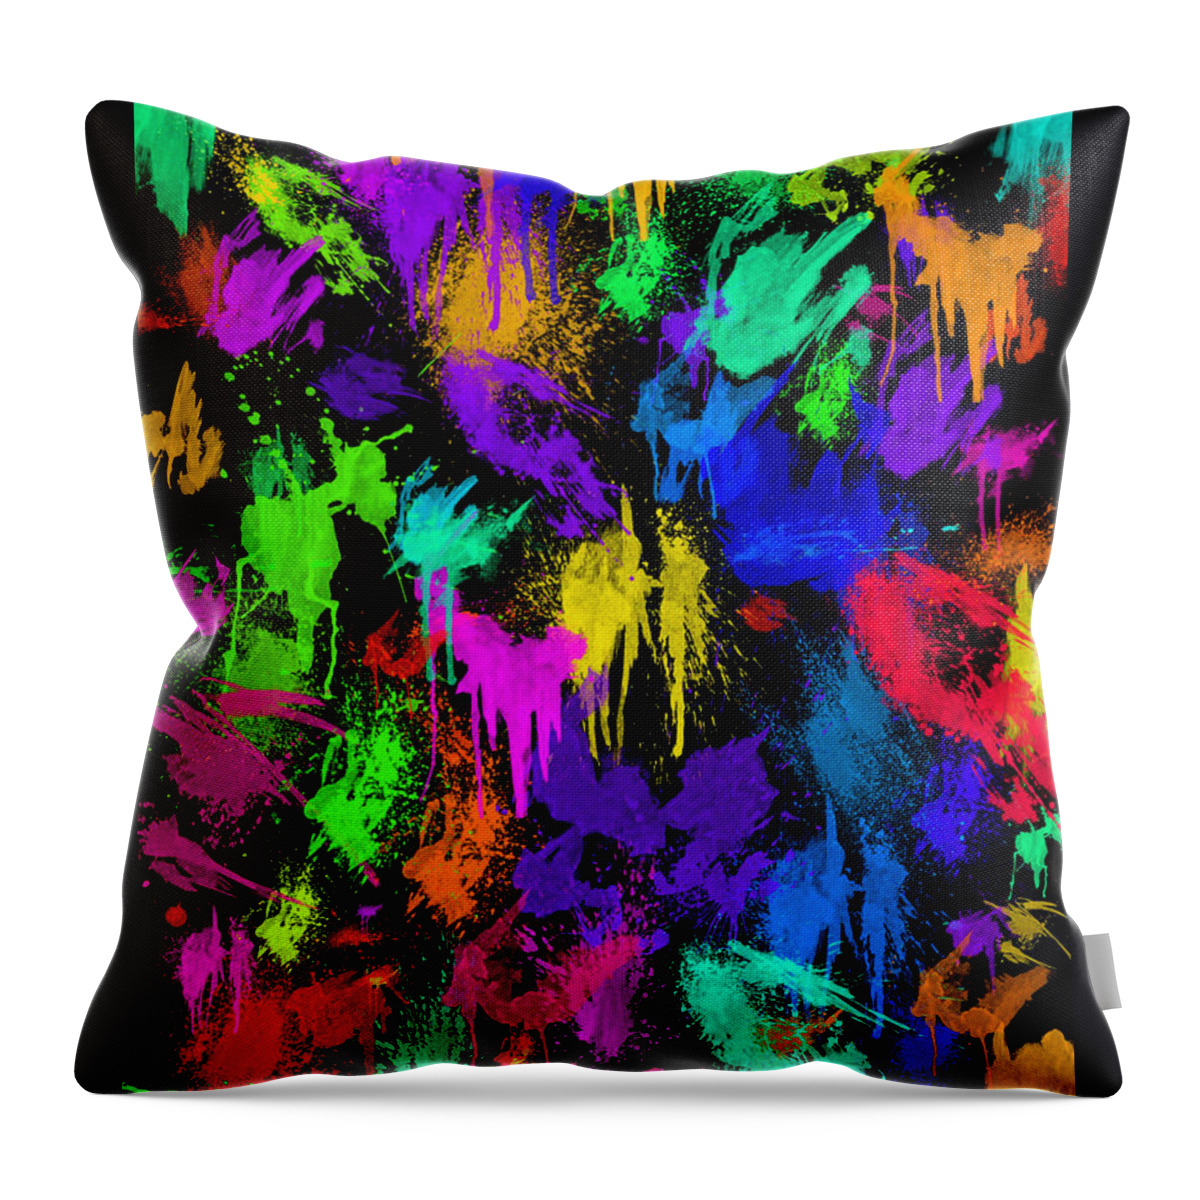 Digital Throw Pillow featuring the digital art Splattered One by Rhonda Barrett